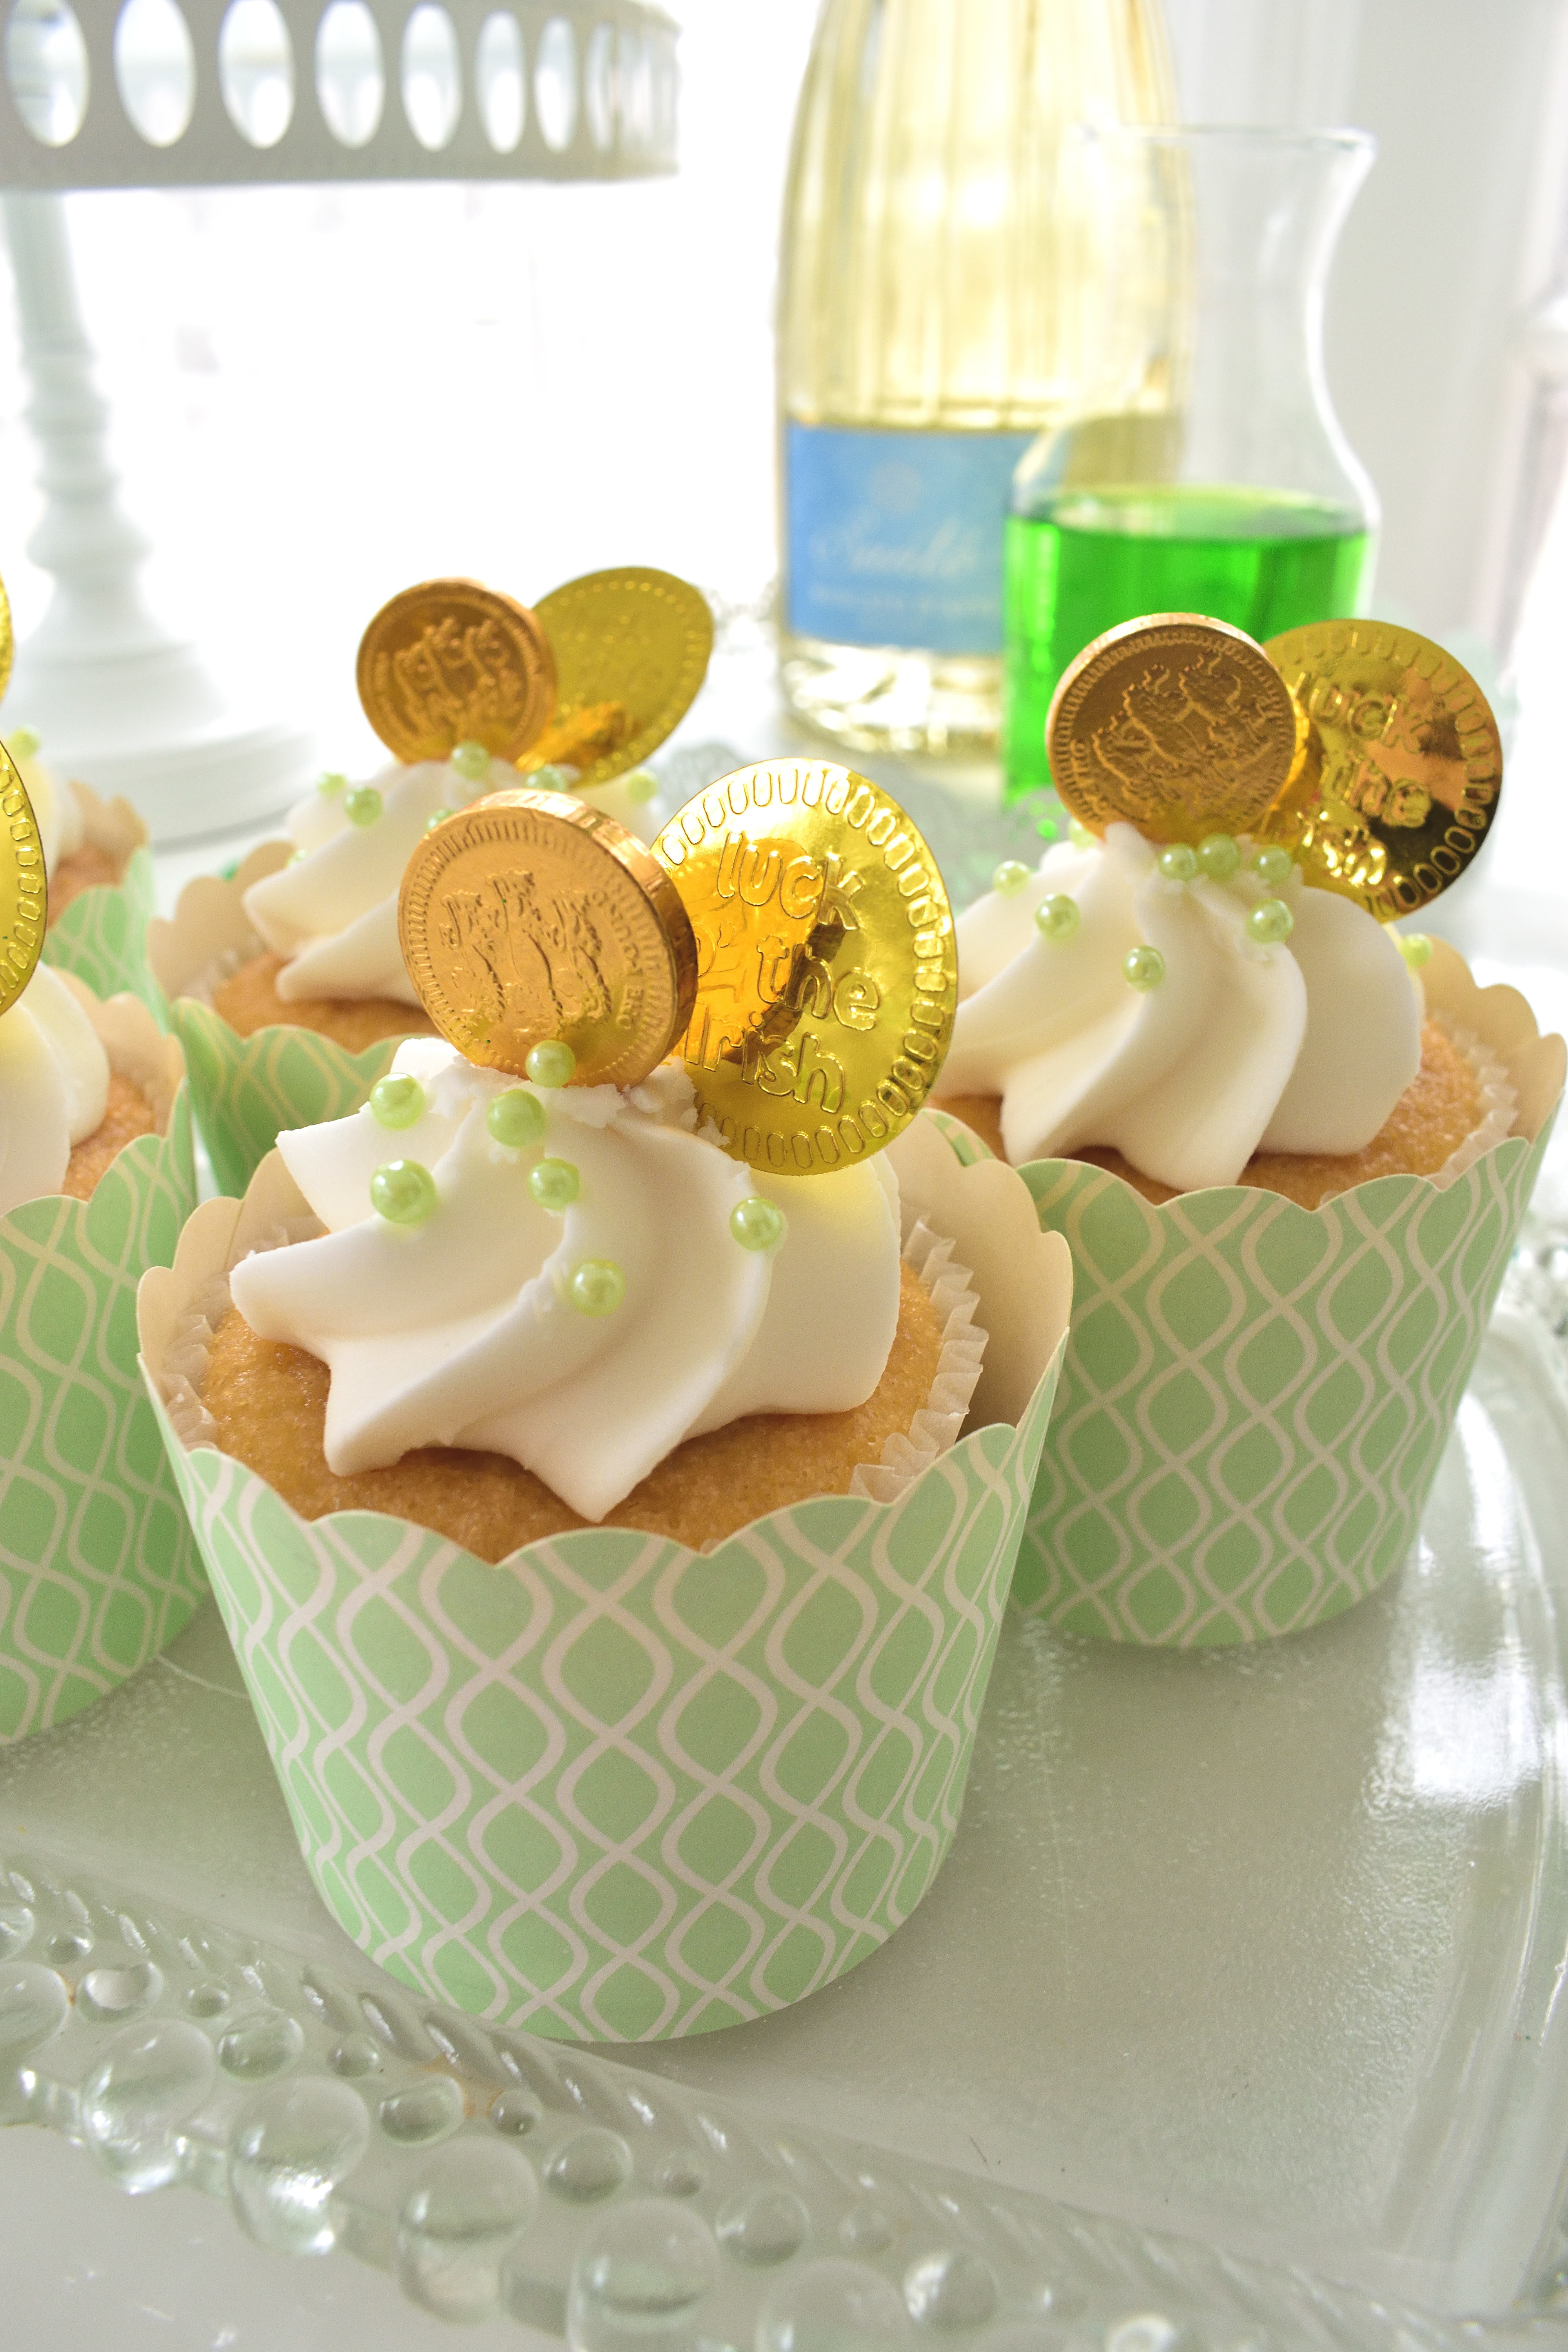 lucky Irish cupcakes